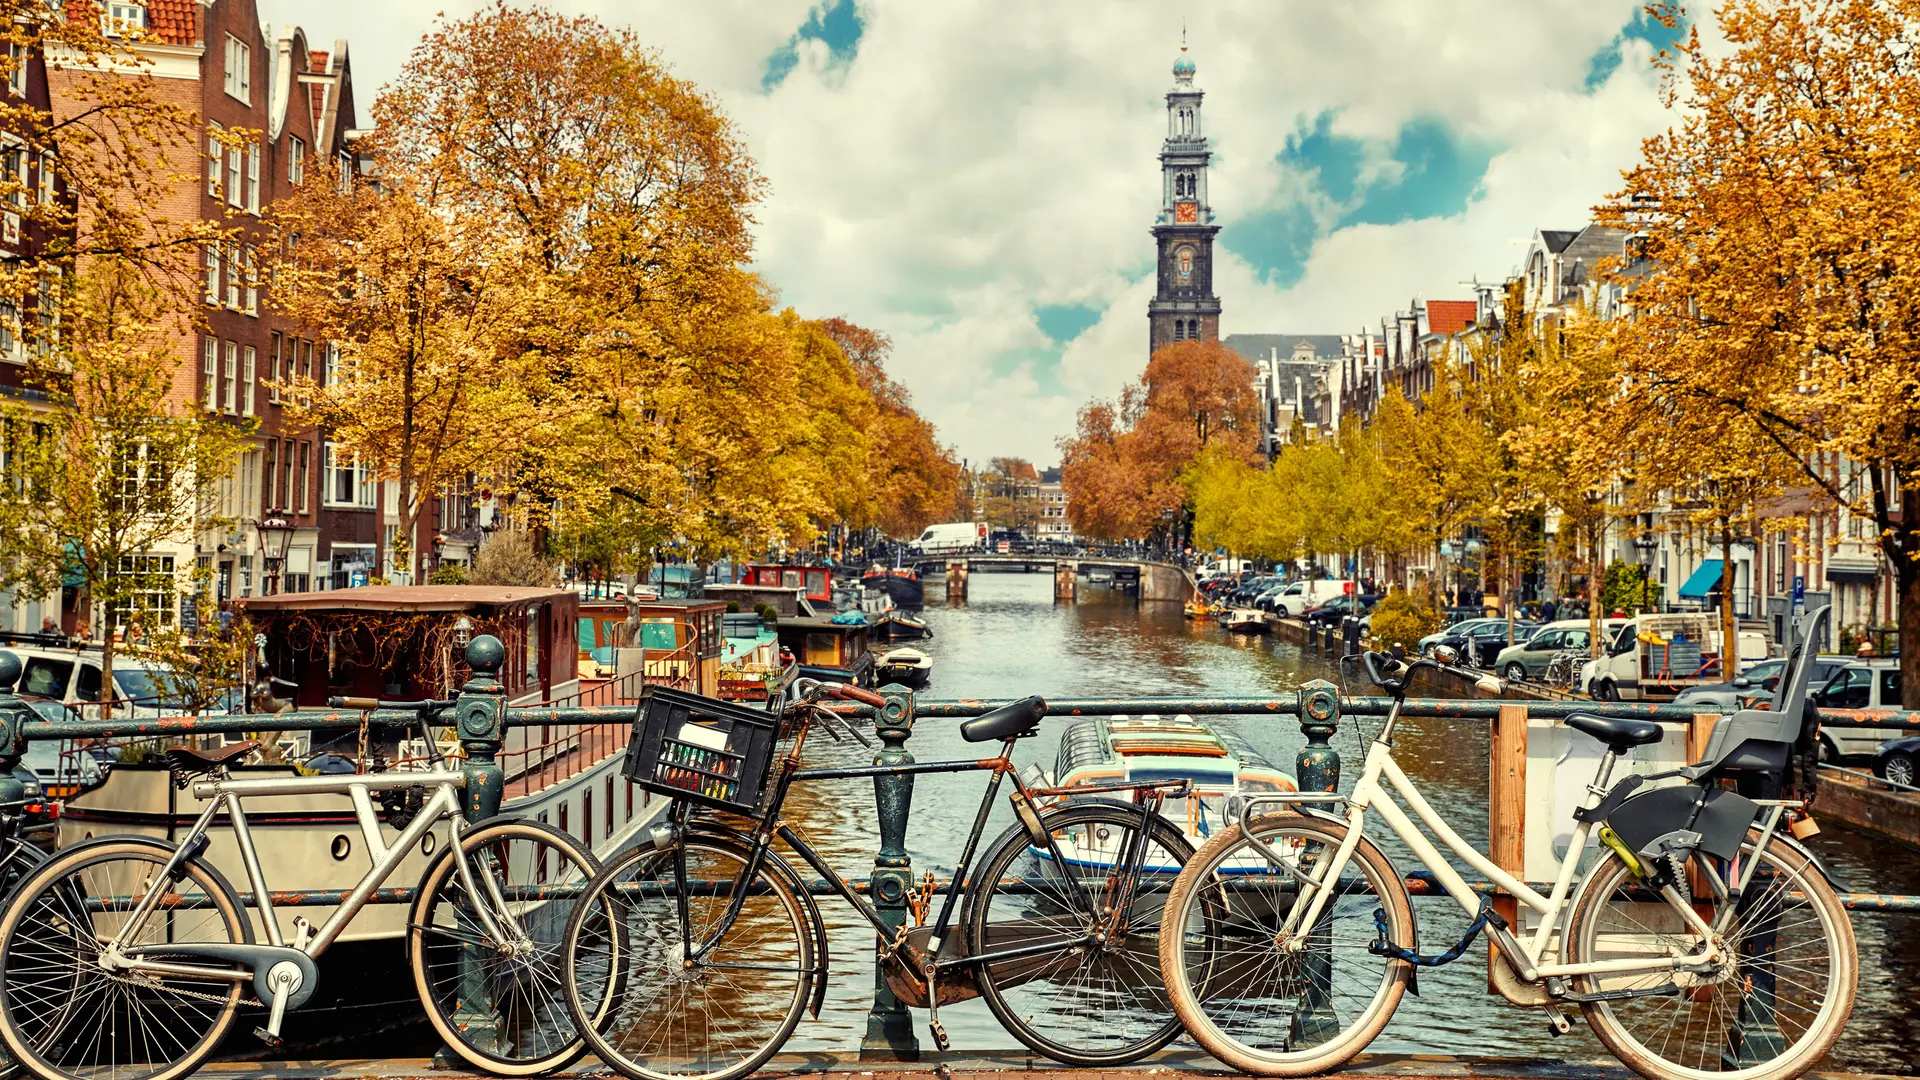 Destinations Articles - Amsterdam Travel Guide